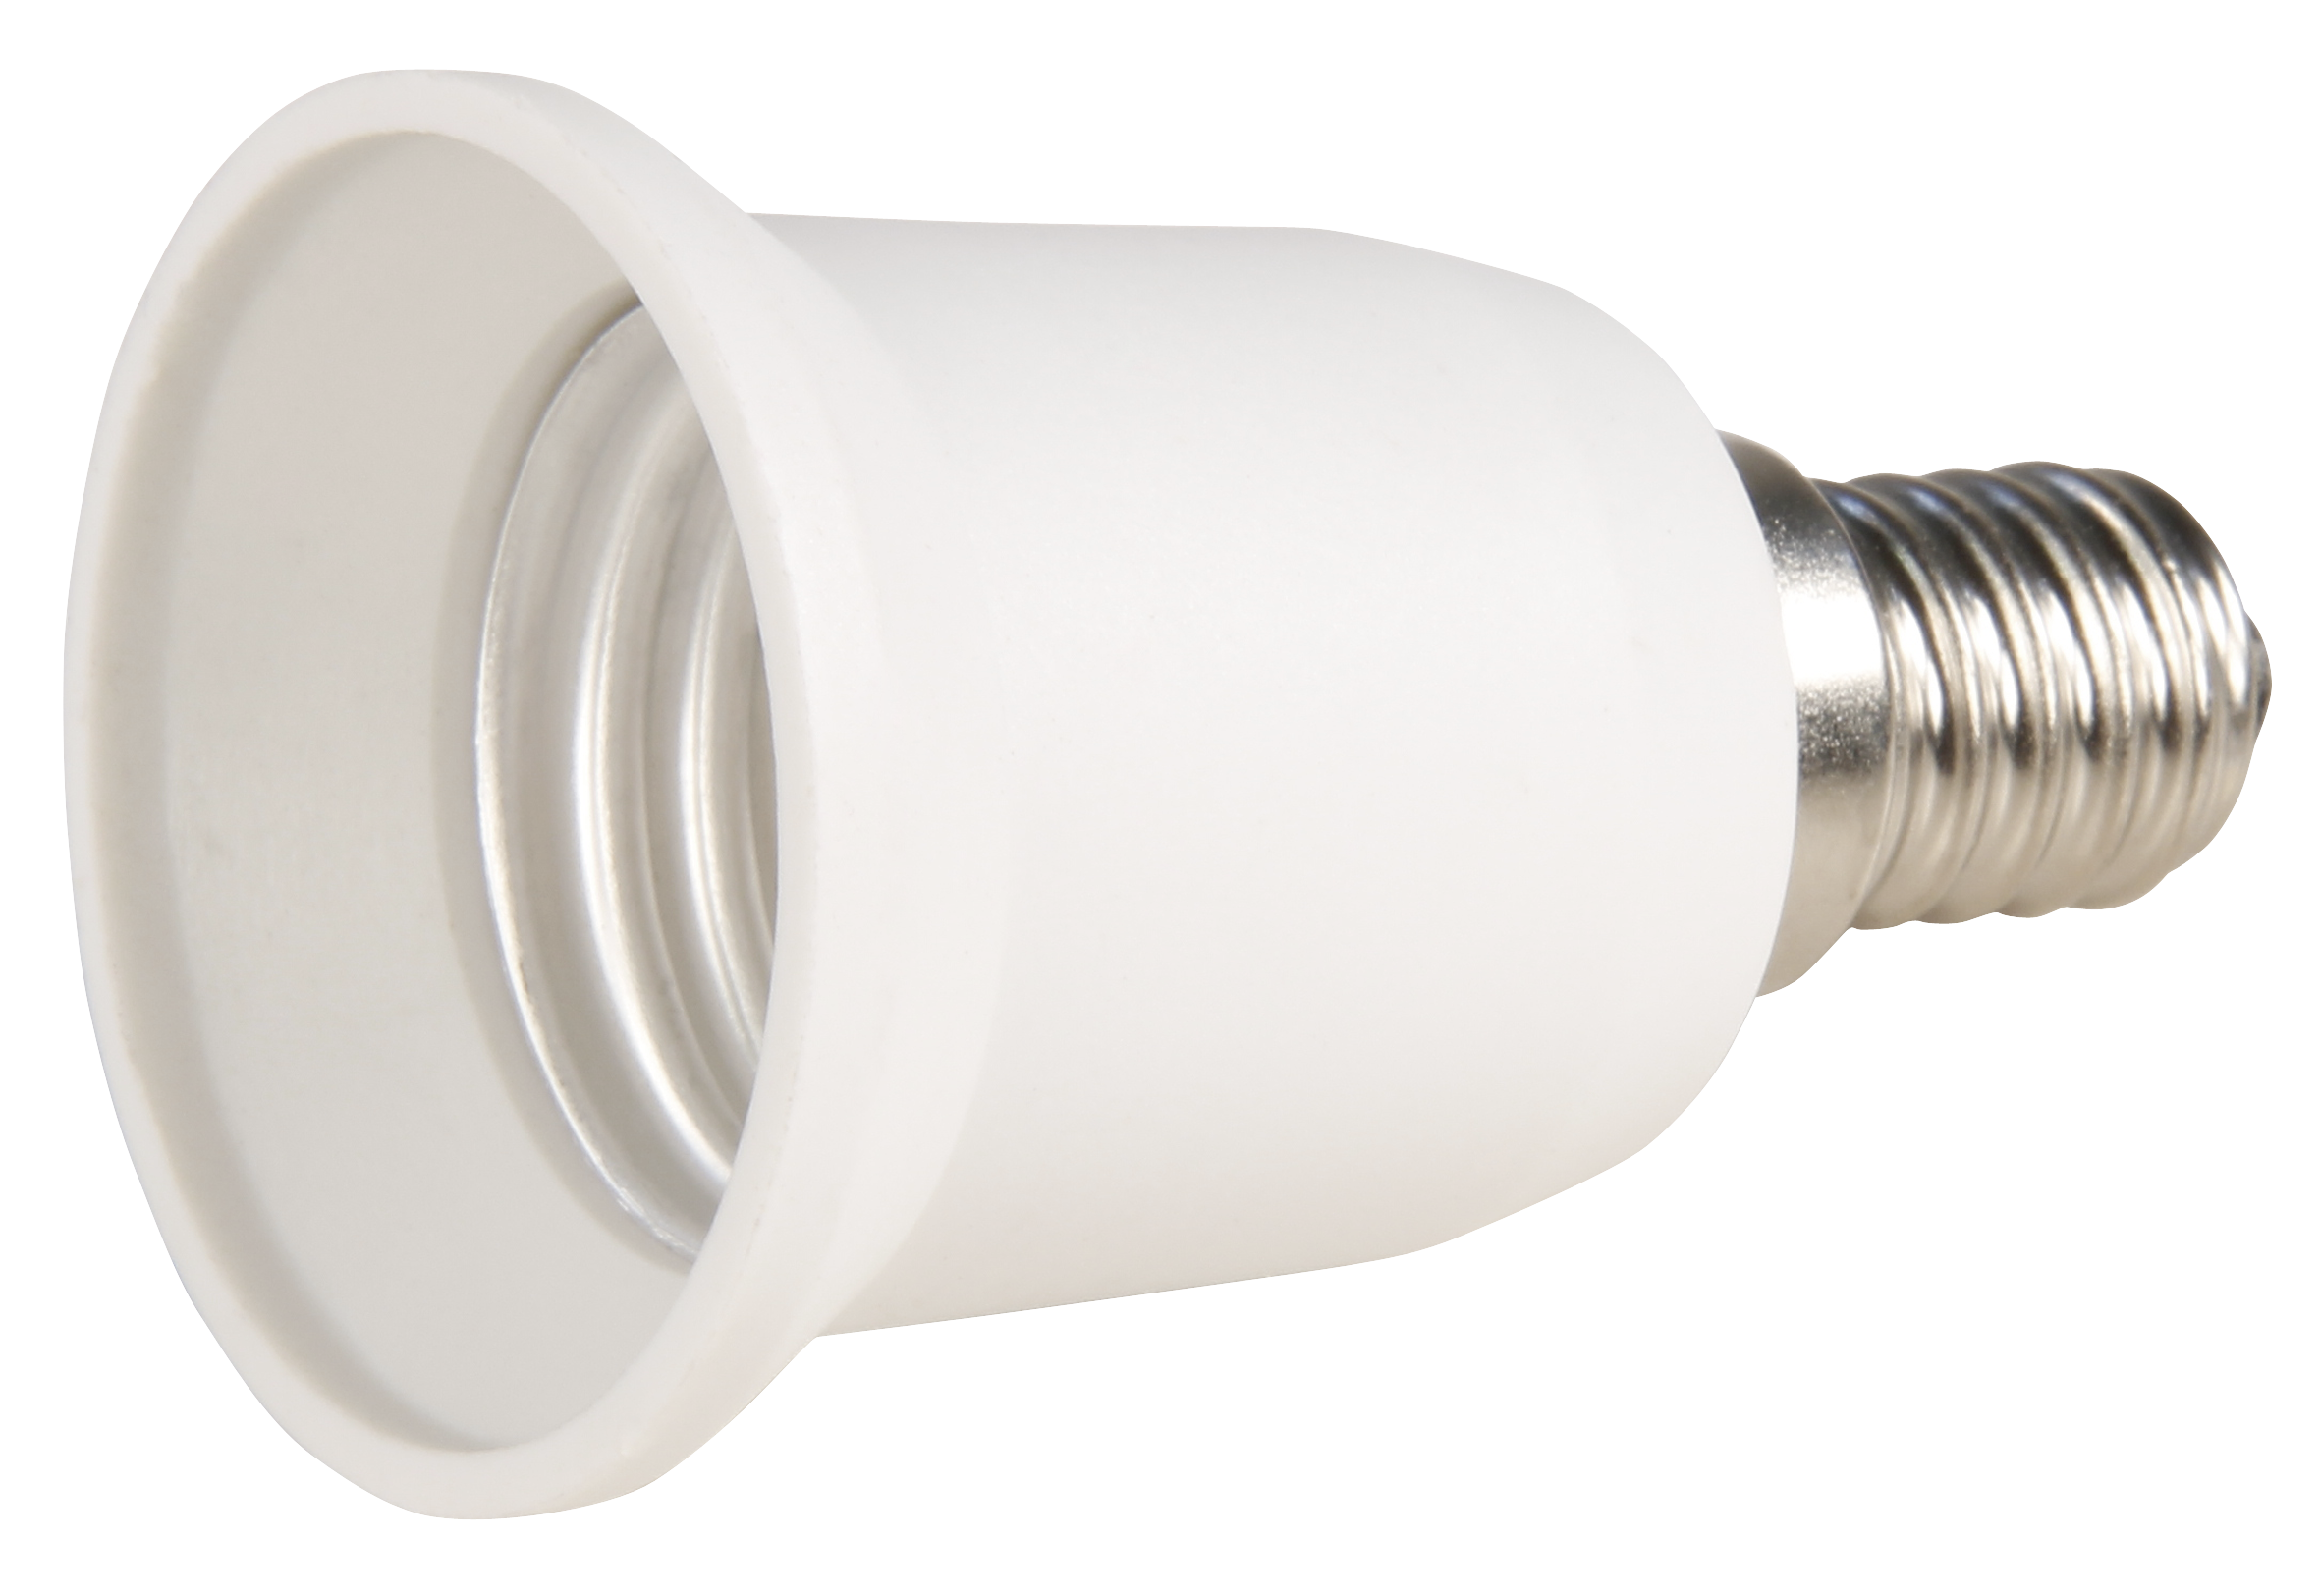 Lampensockel-Adapter McShine, E14 auf E27